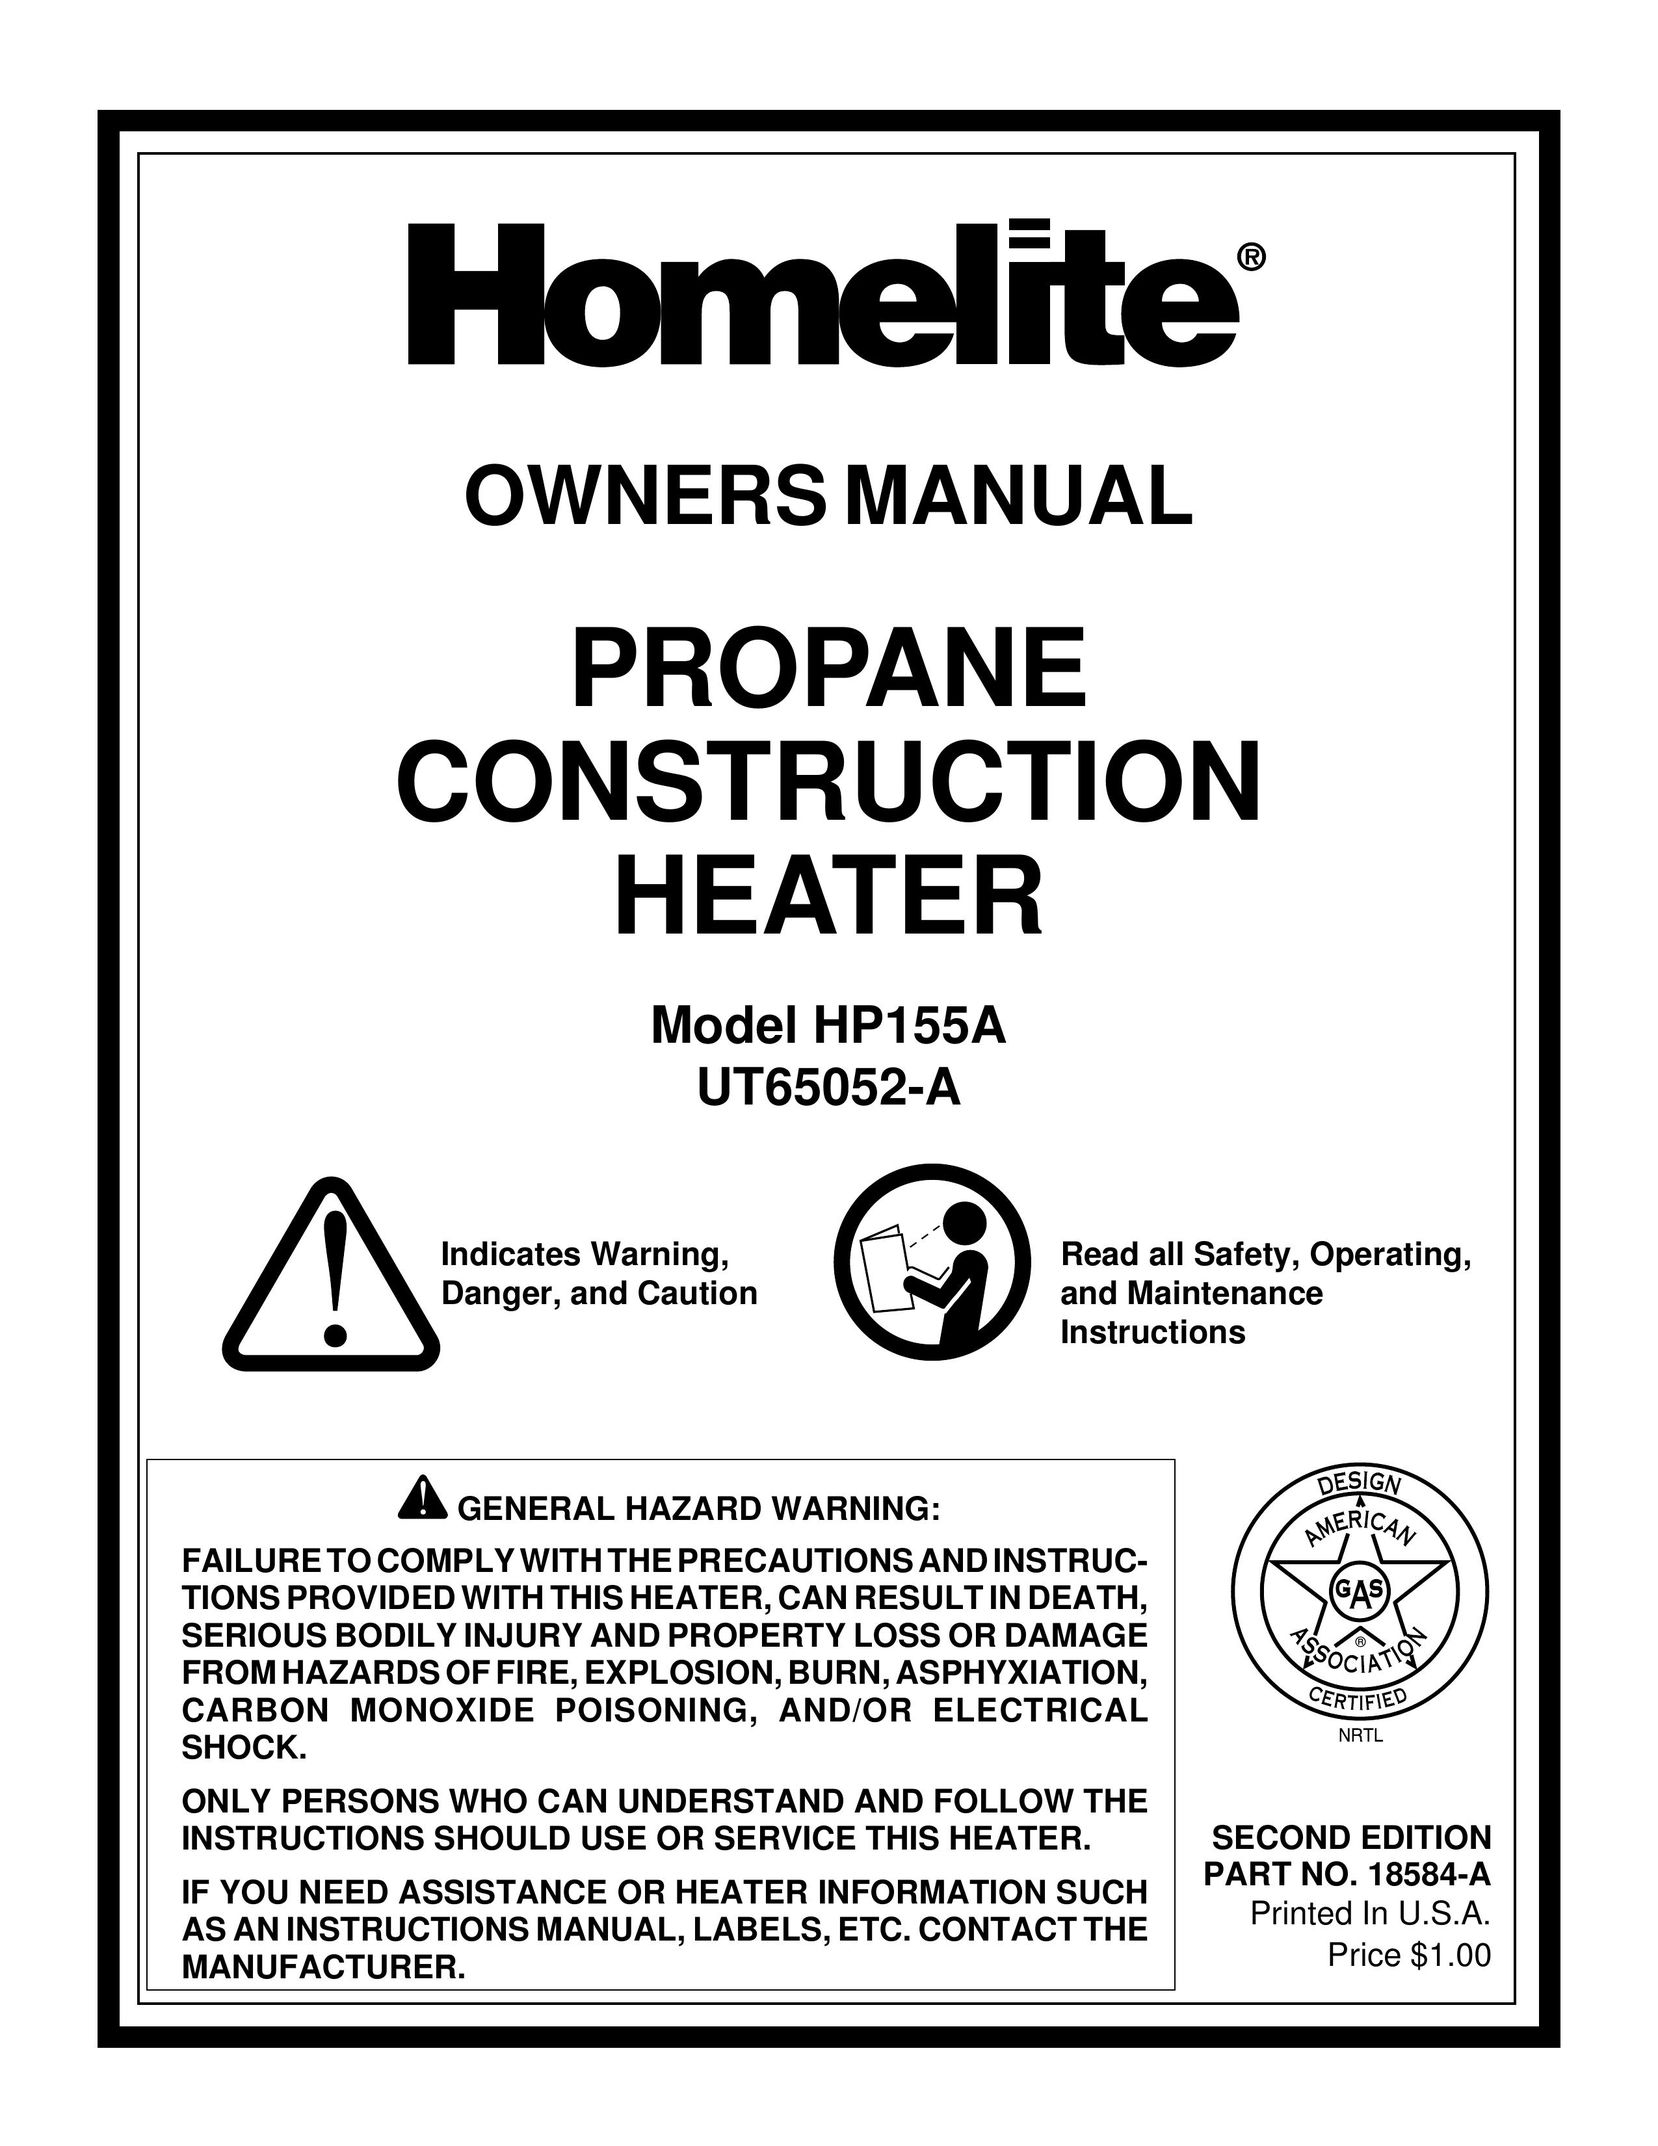 Homelite UT65052-A Electric Heater User Manual